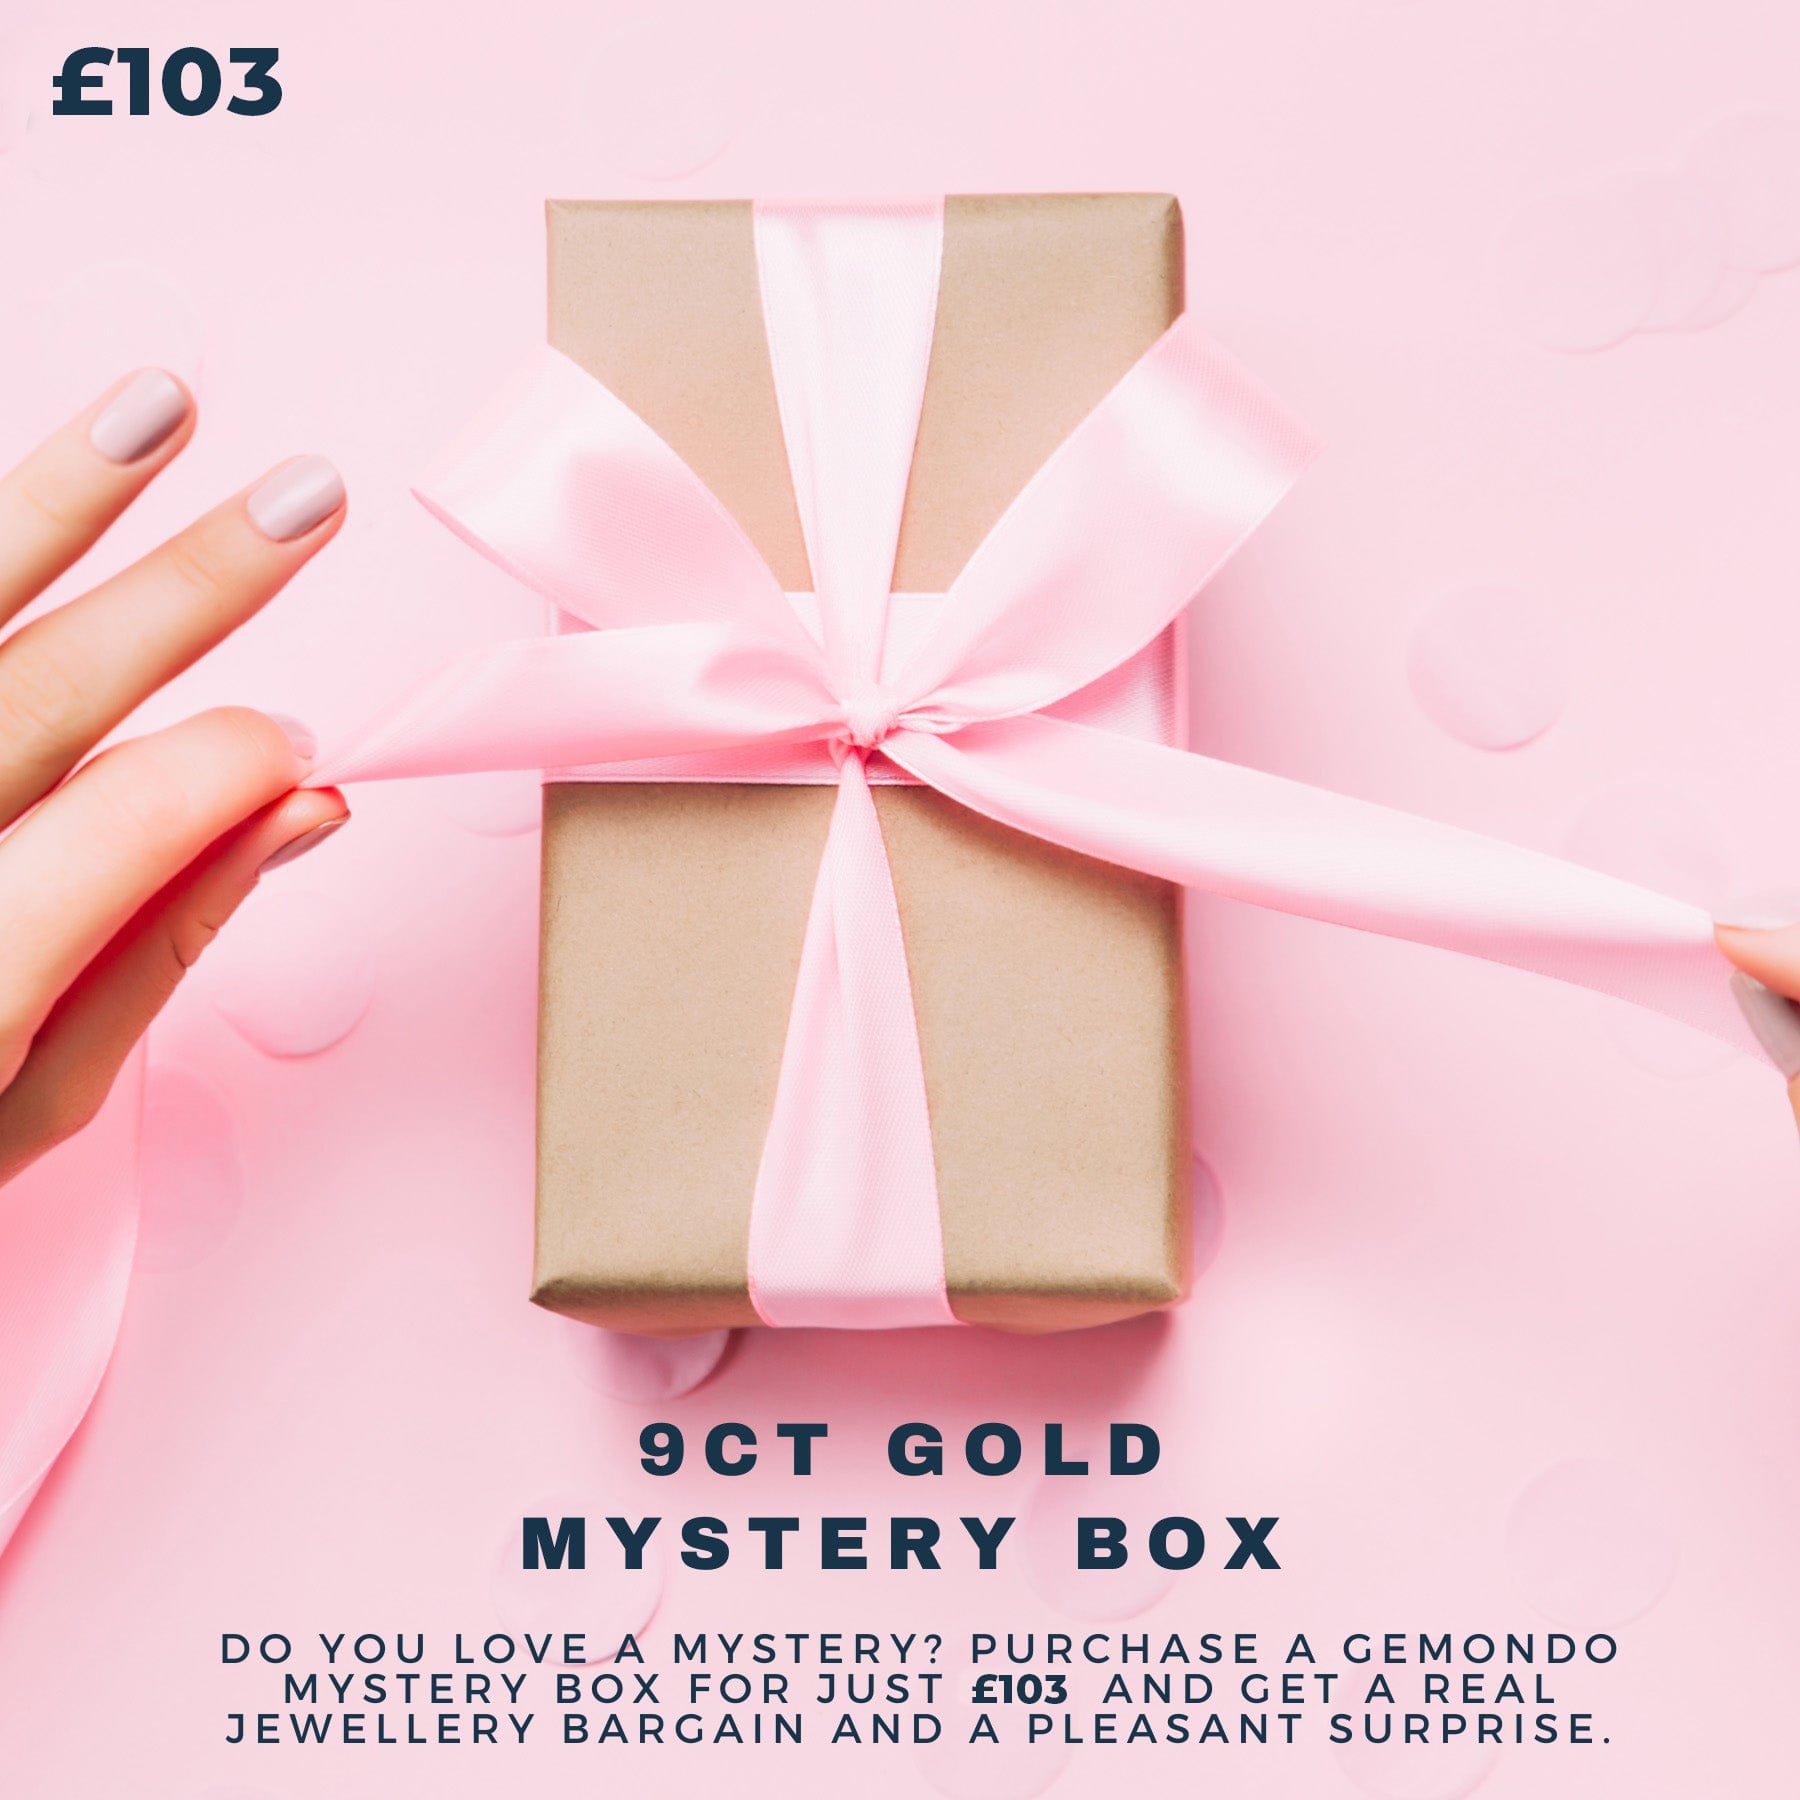 mysteryboxgold Gold Mystery Box 1